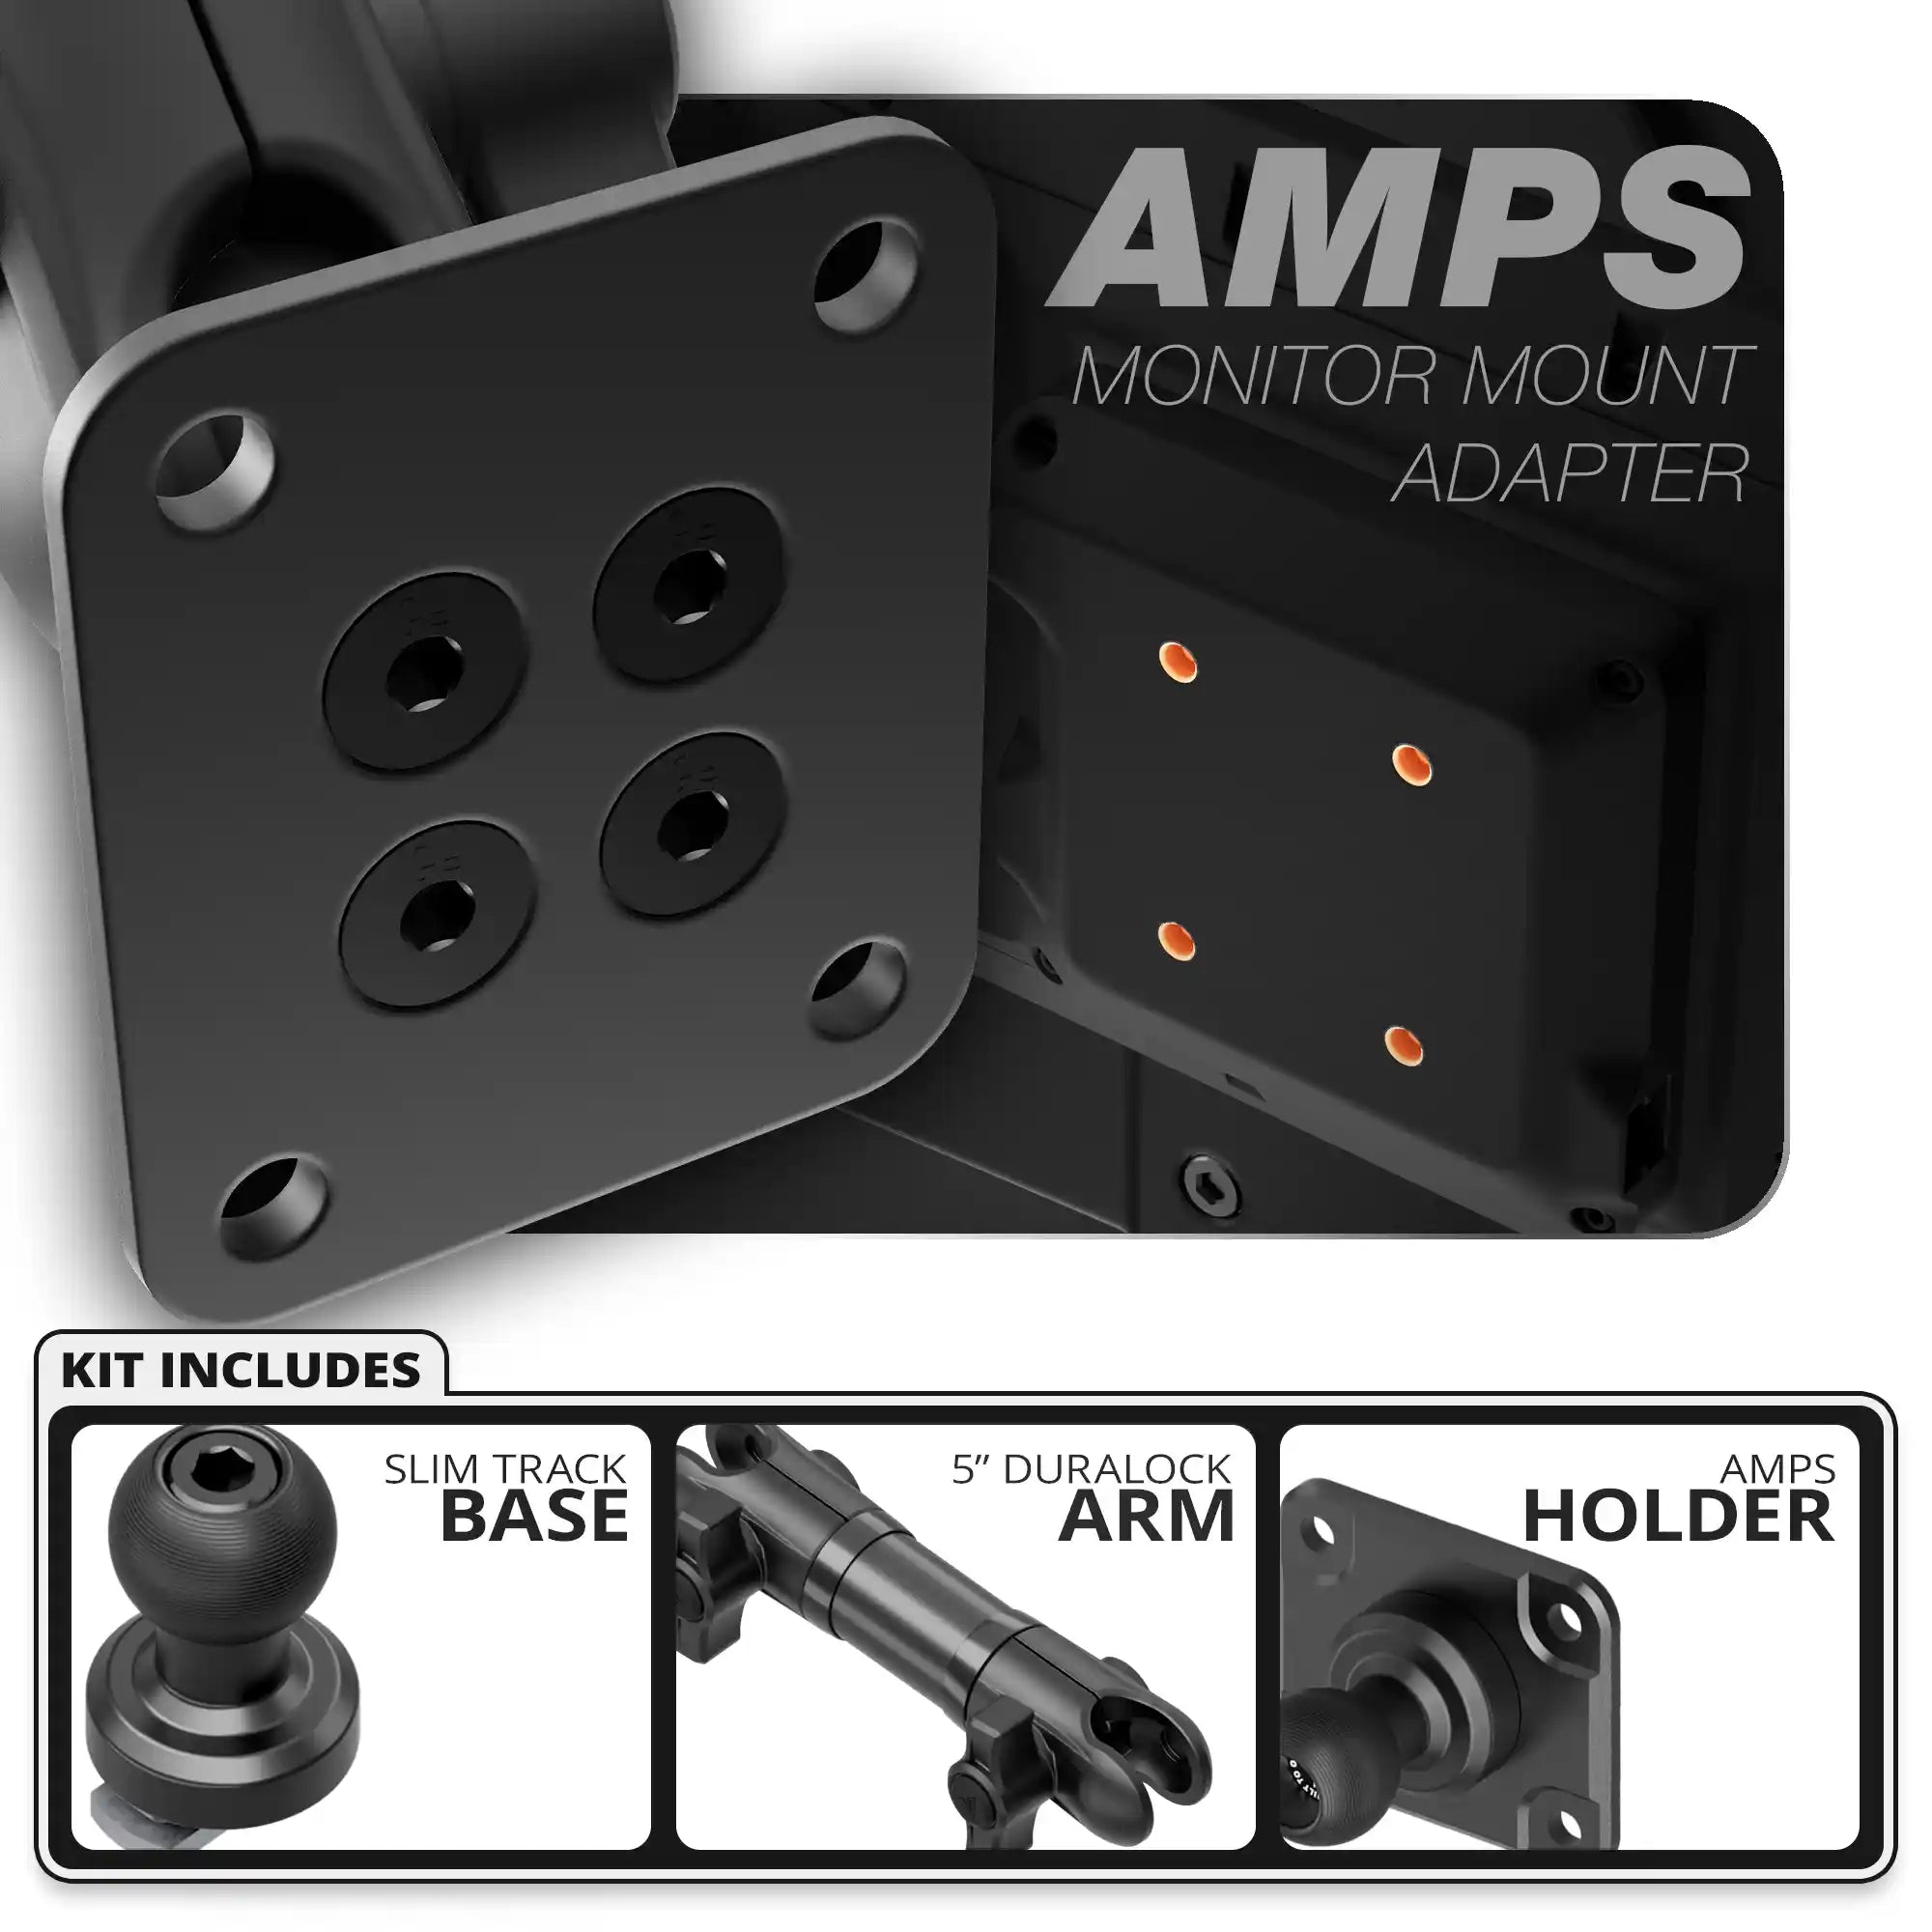 AMPS | Slim Track Base | 5" DuraLock Arm